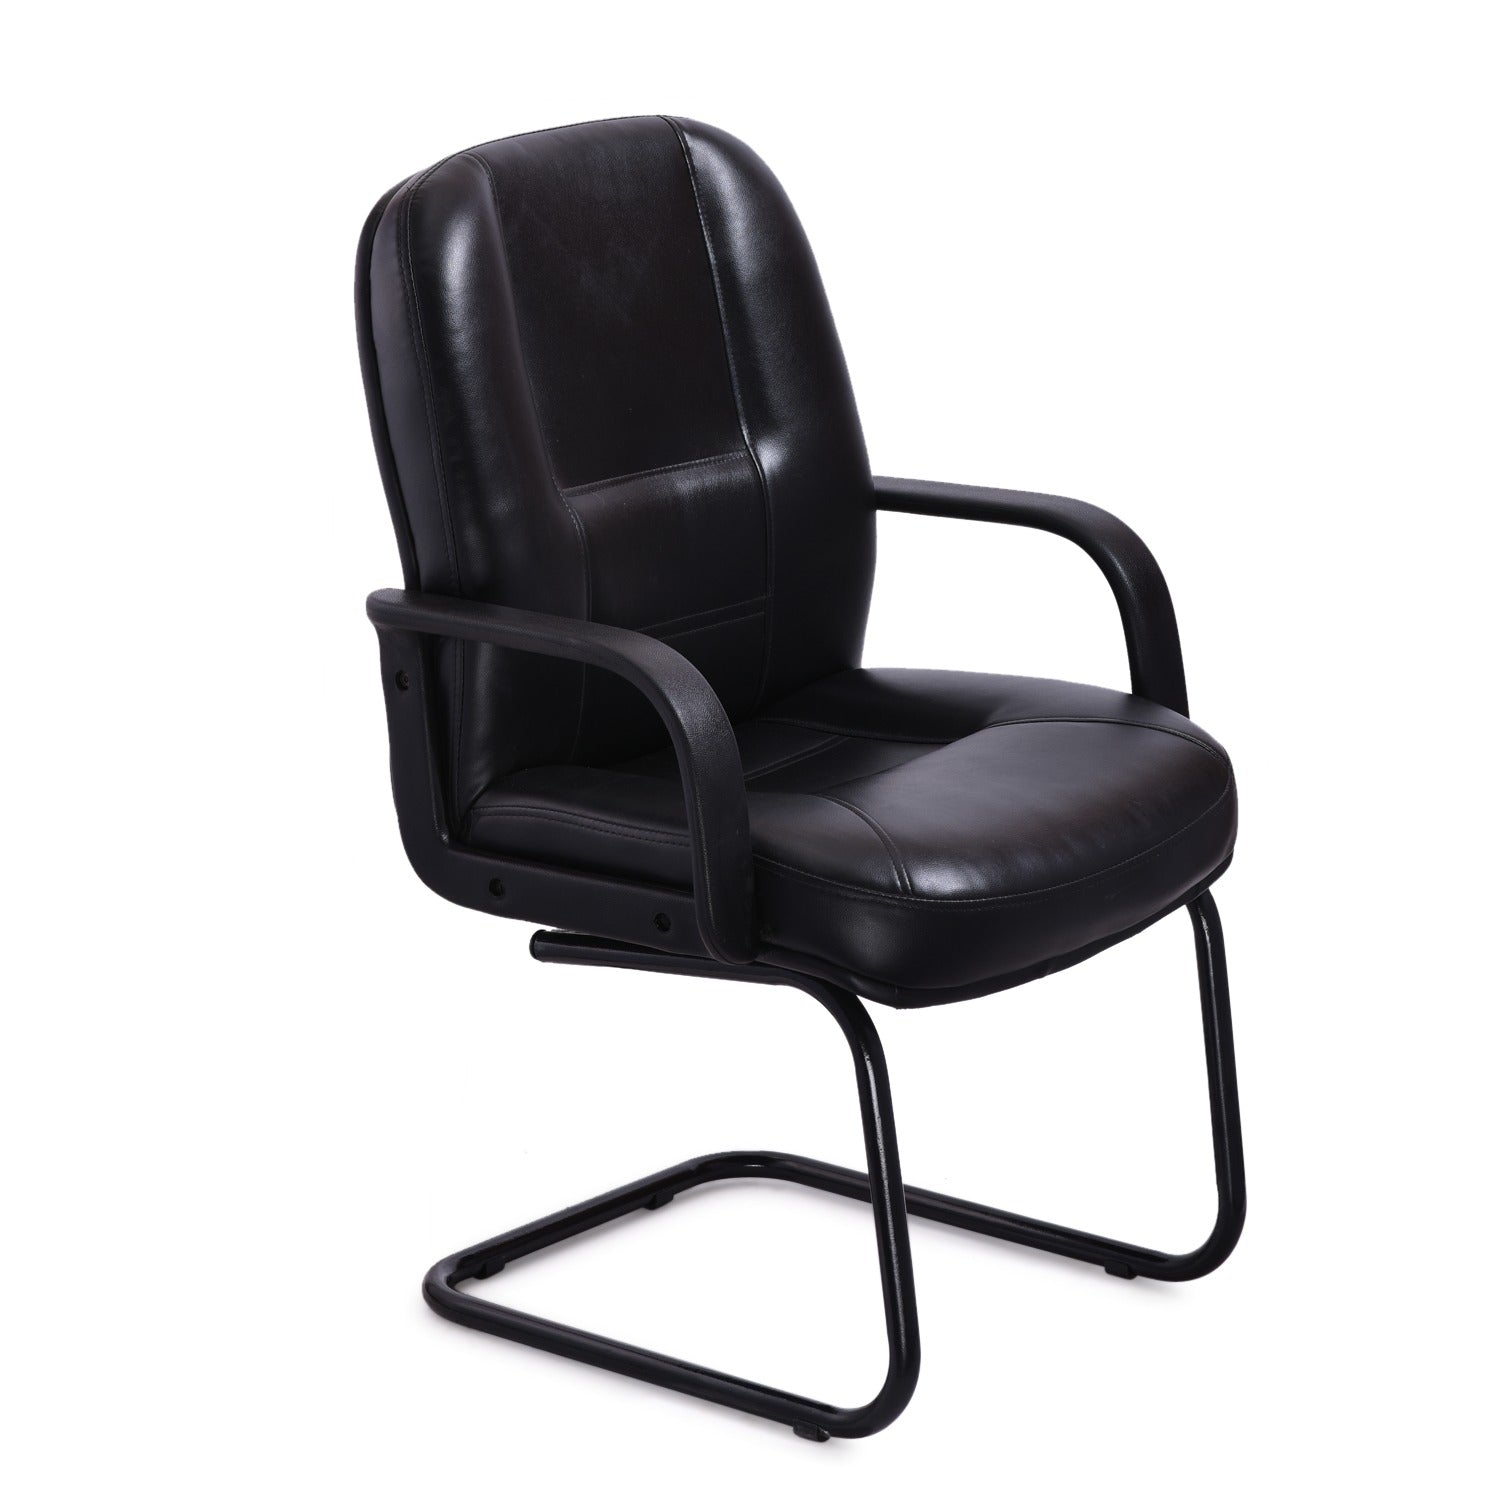 ZSV1044 Medium Back Chair by Zorin in Black Color Zorin